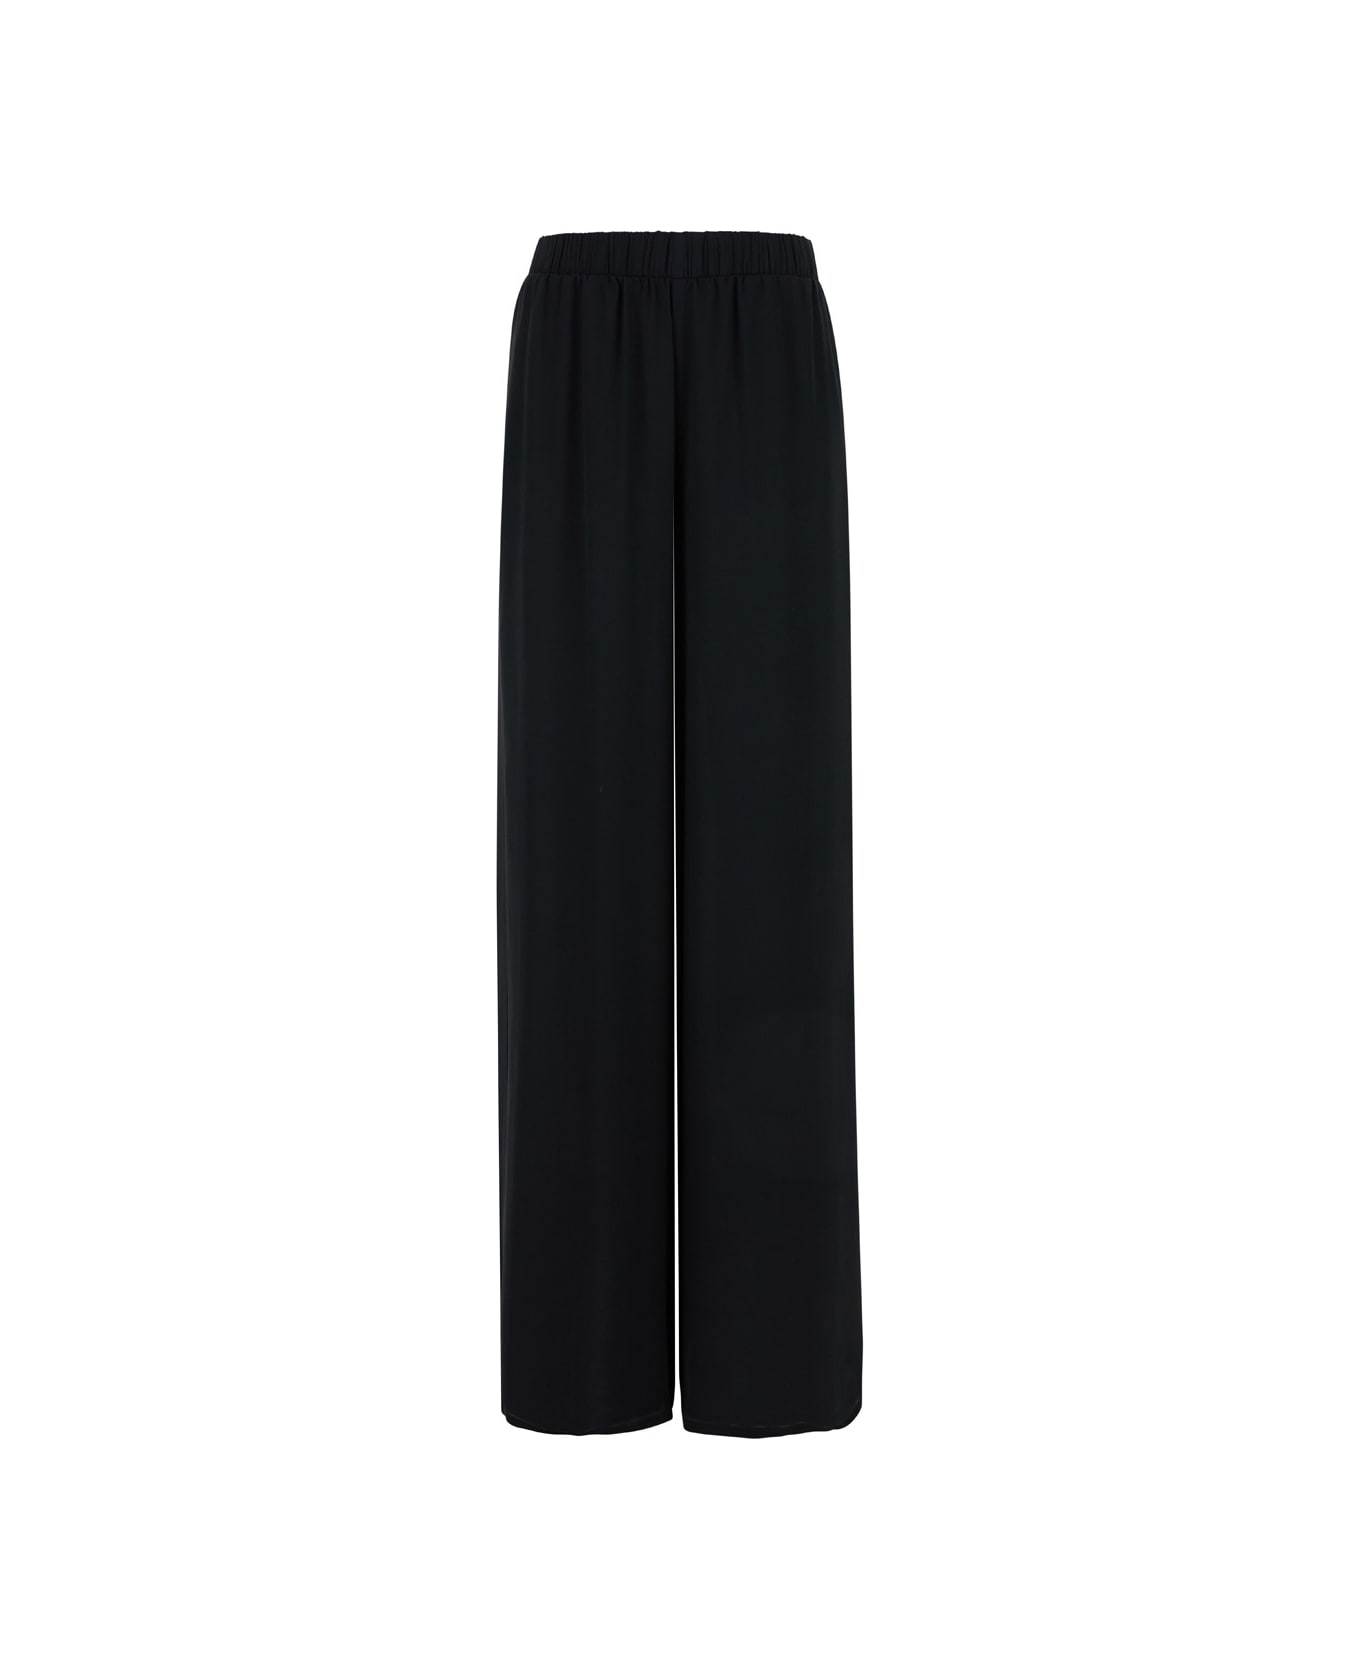 Federica Tosi Black Trousers With Elastic Waistband In Silk Blend Woman - Black ボトムス